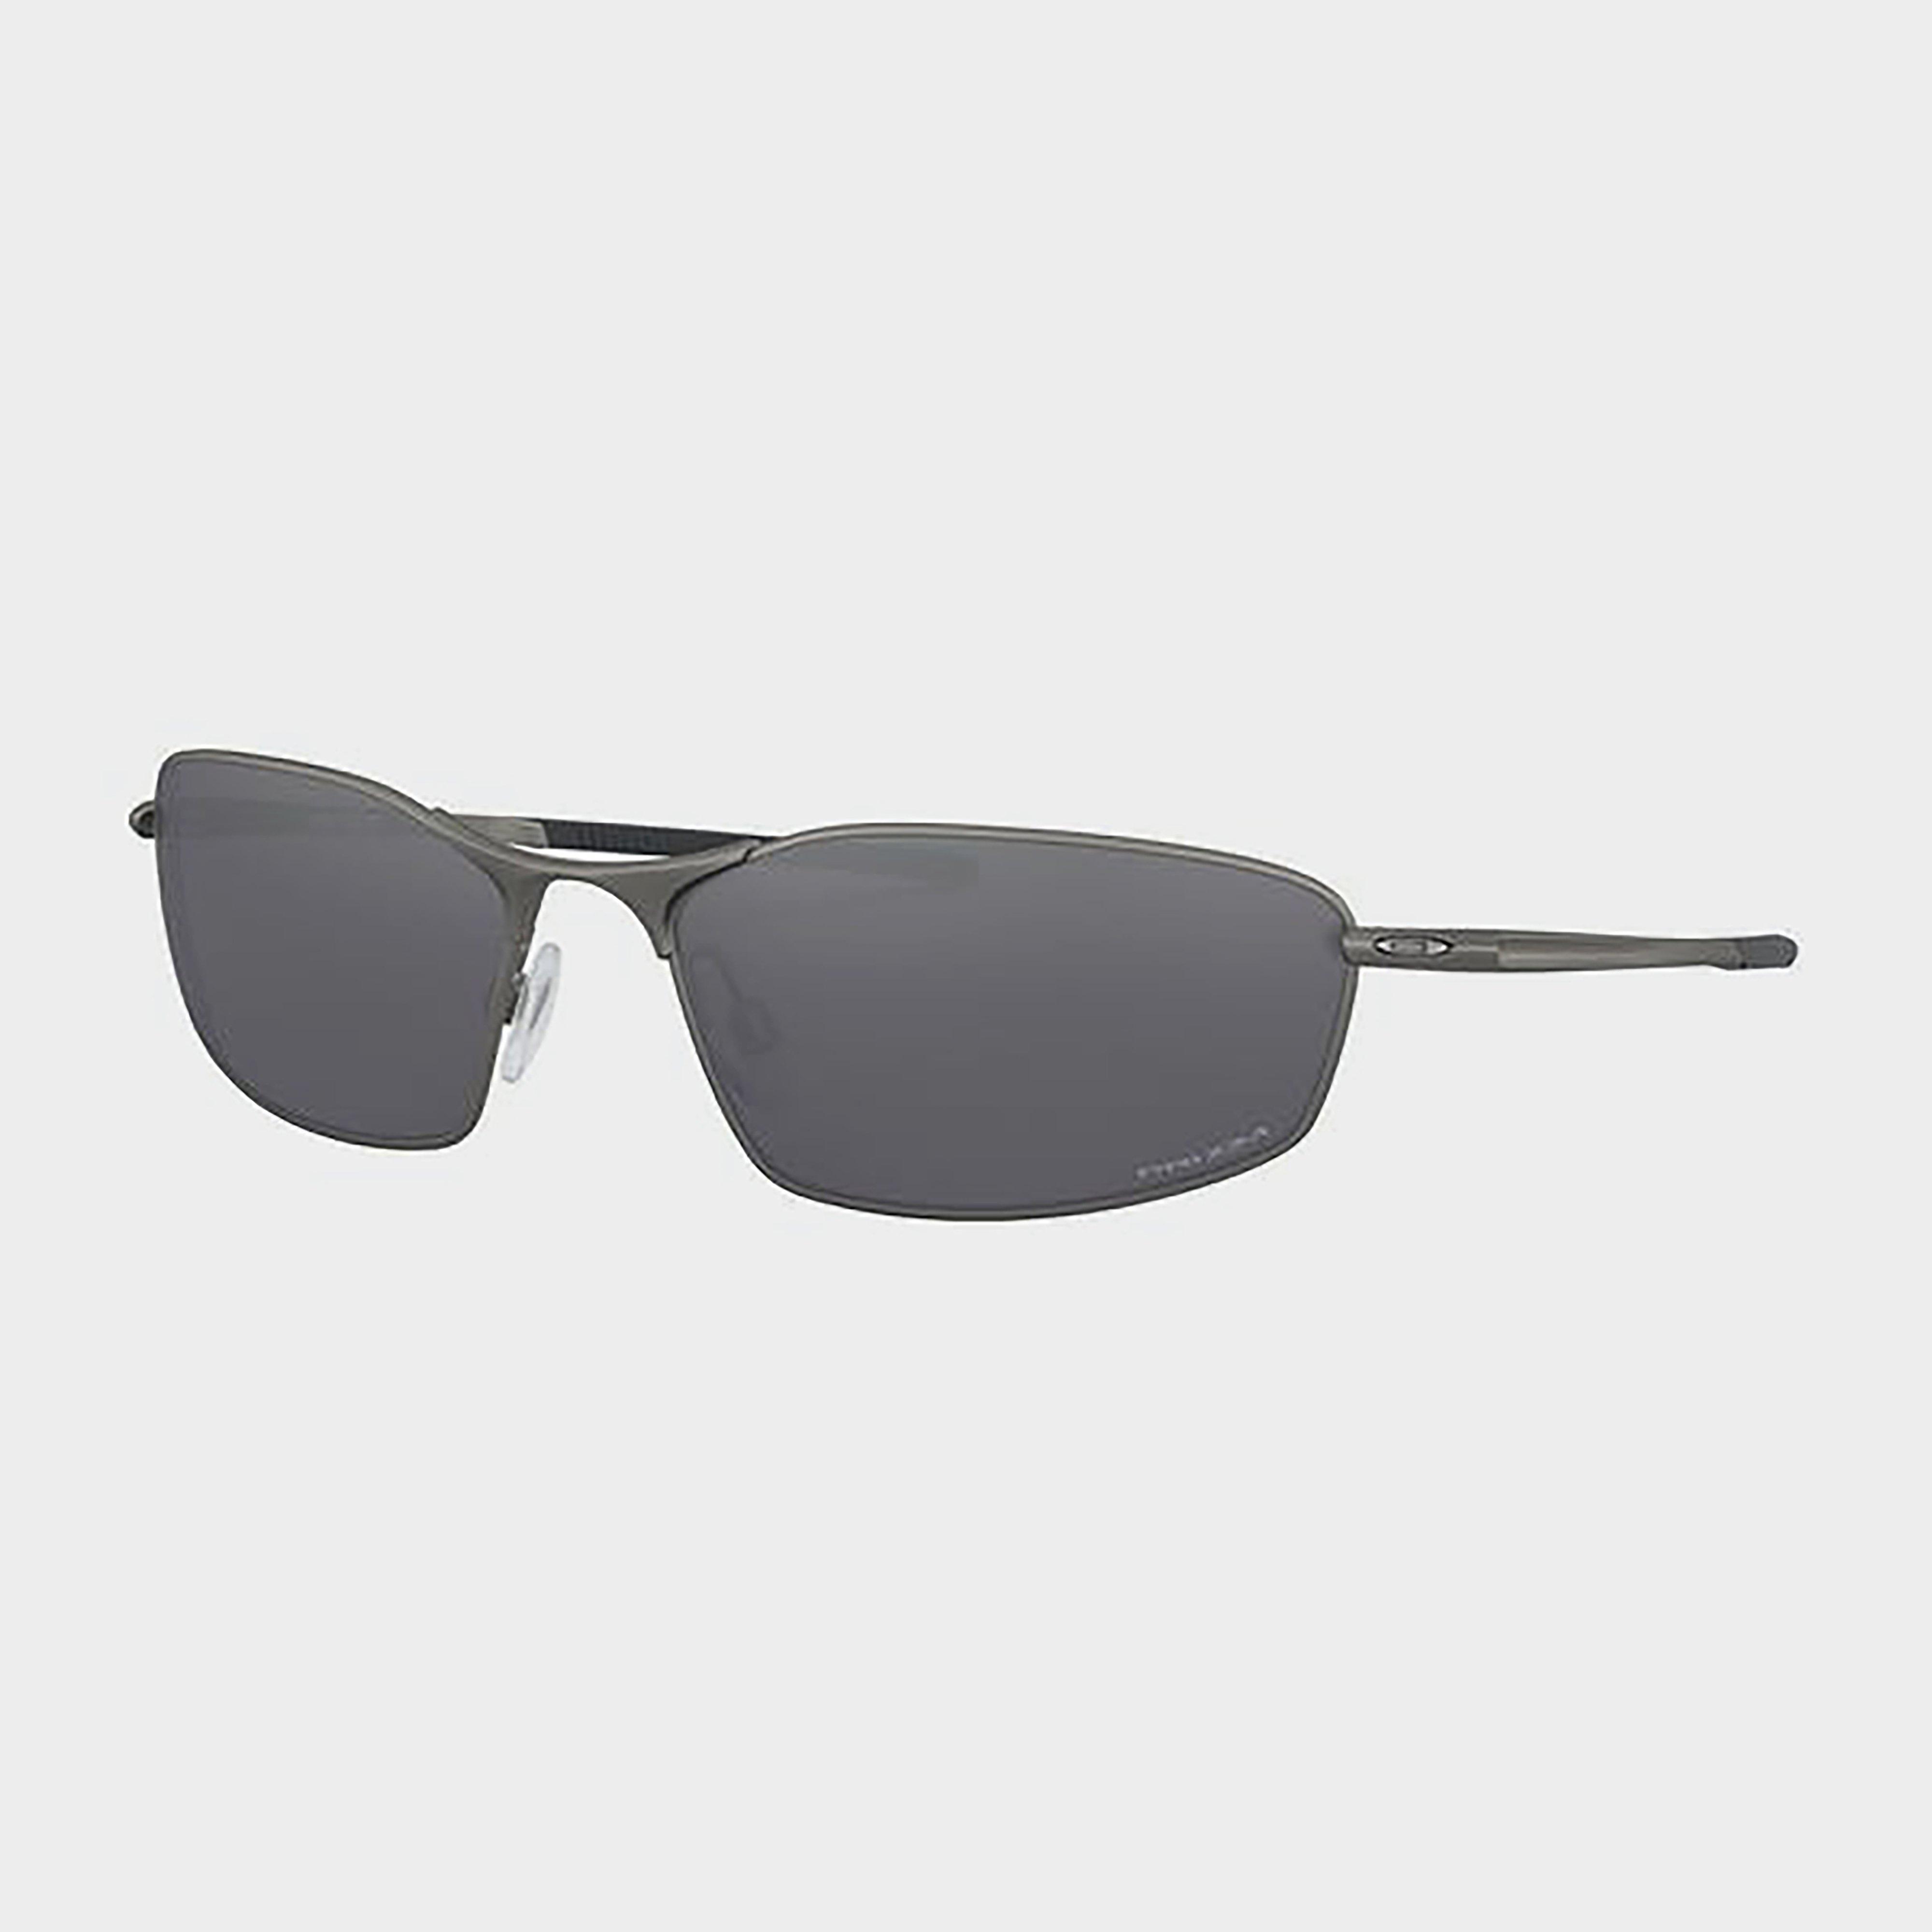  Oakley Whisker Carbon Sunglasses, Grey